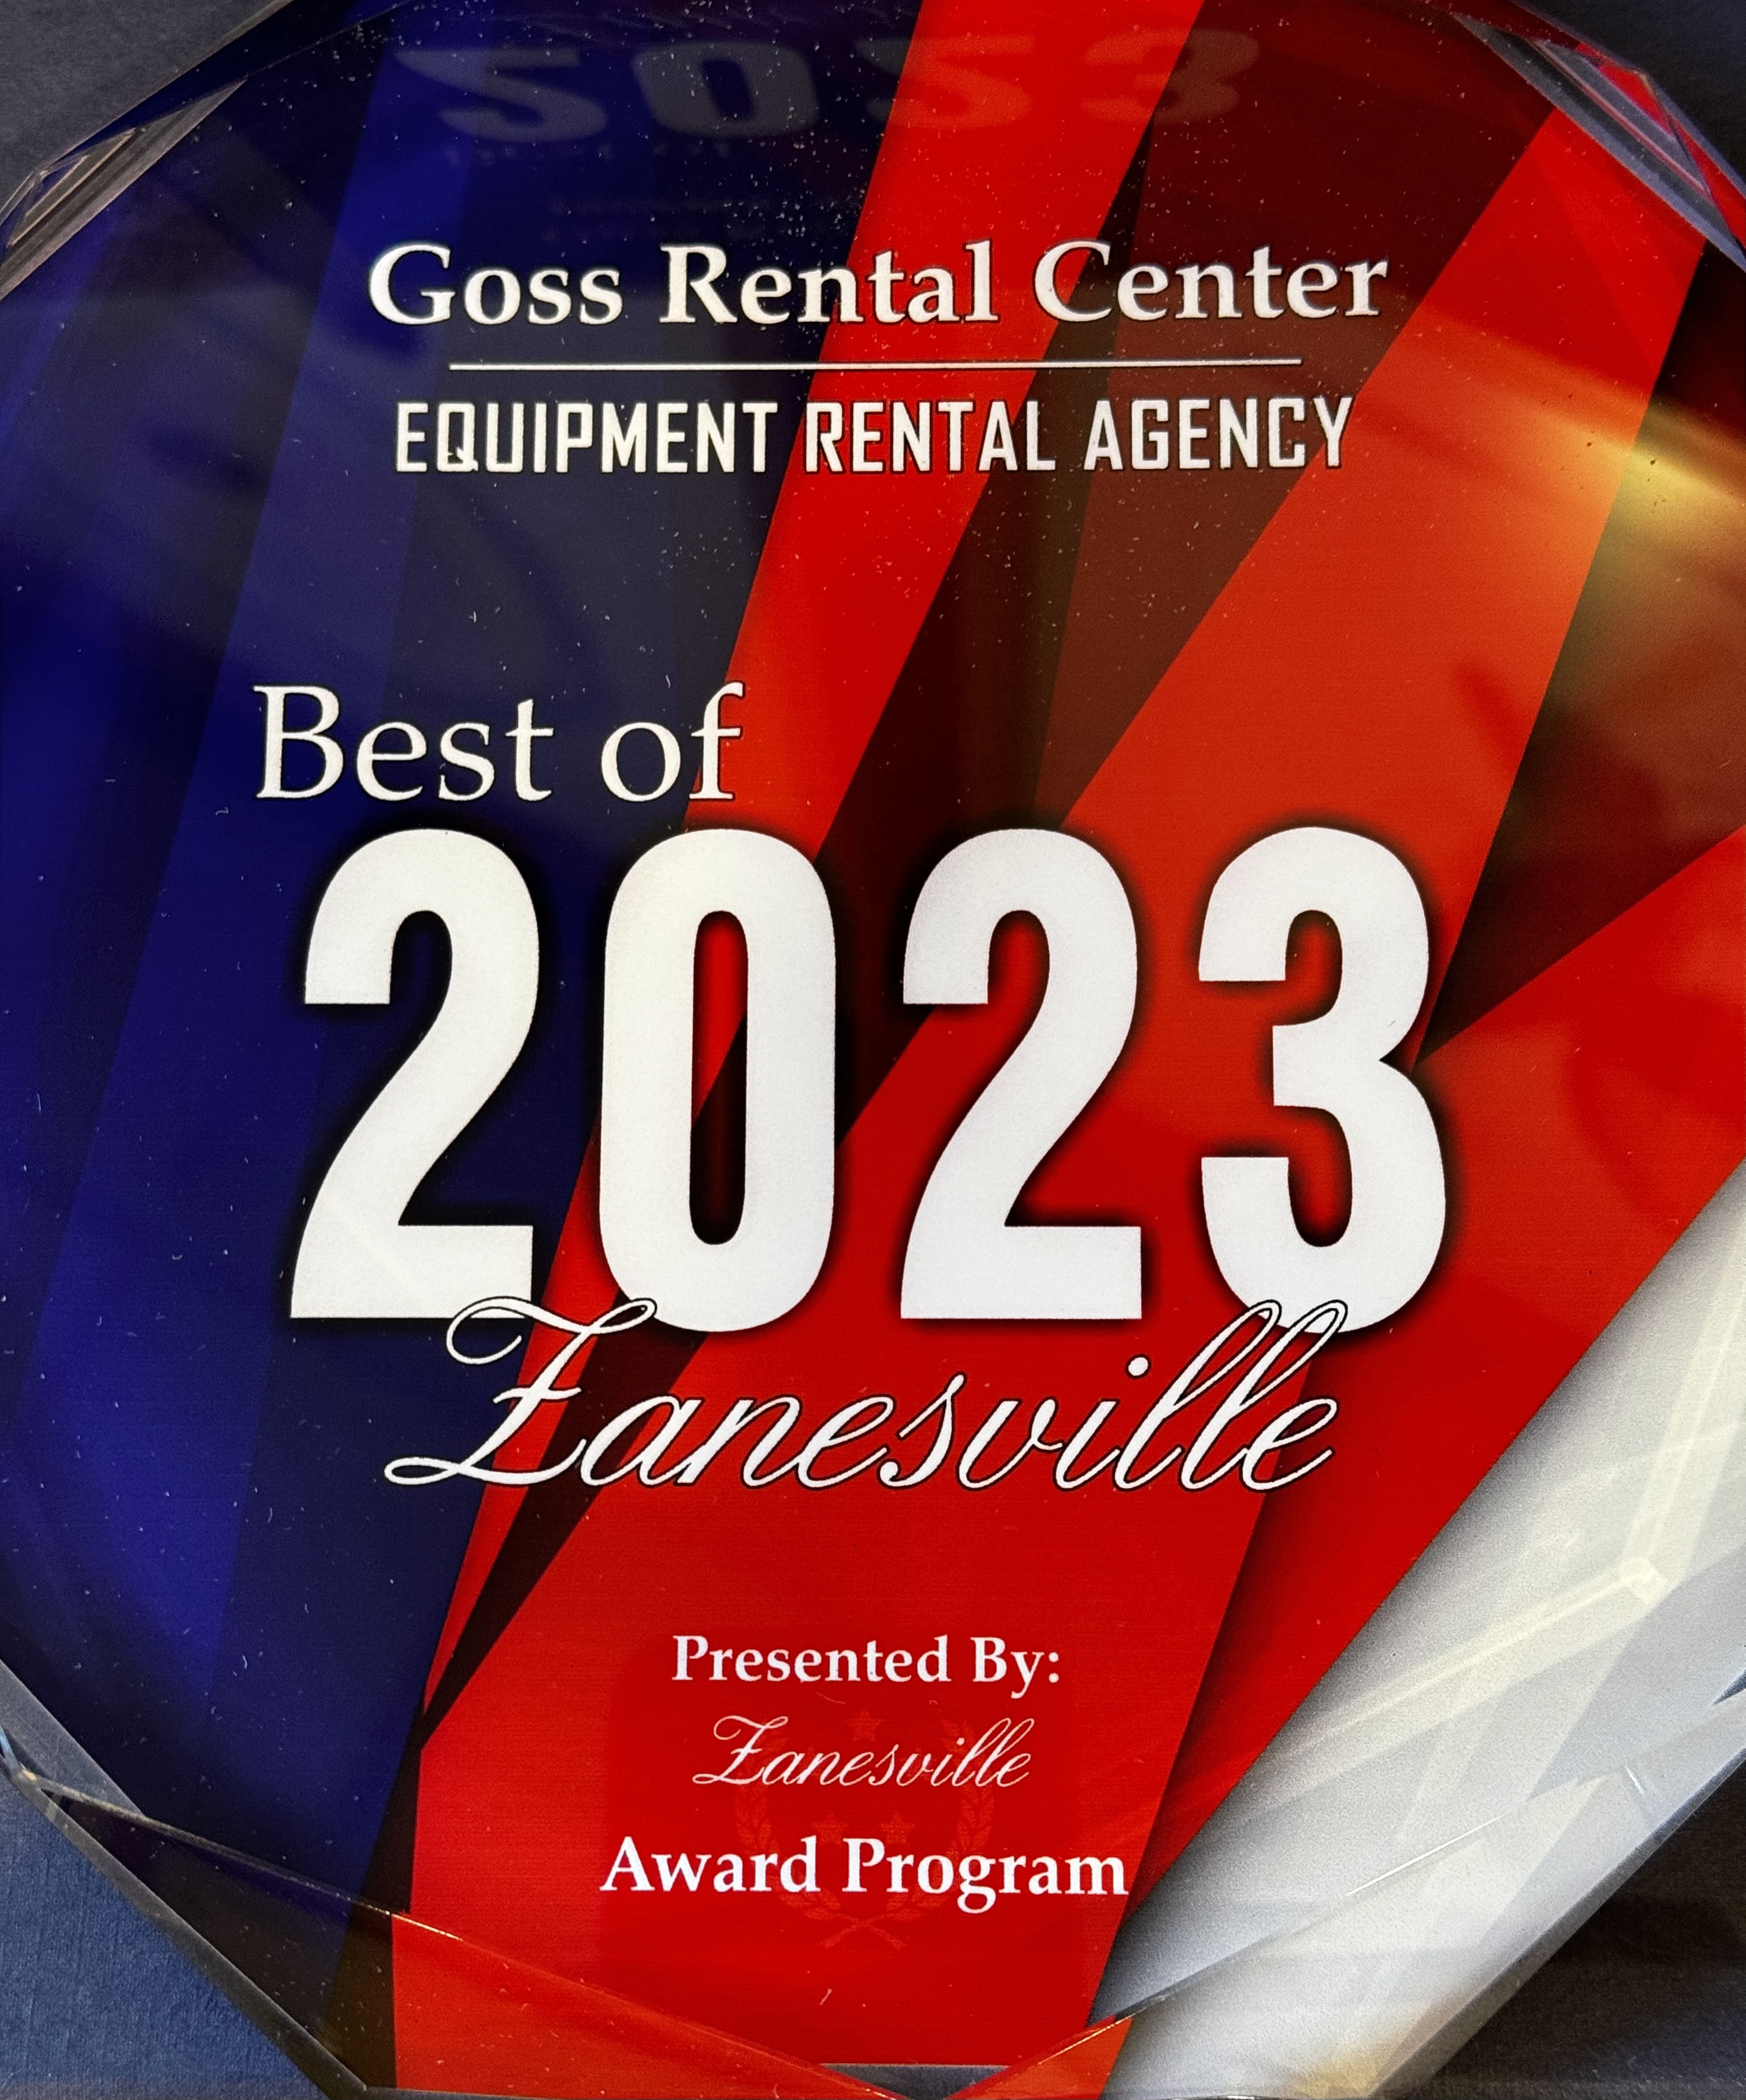 Goss-Rental-Best-Zanesville-Equipment-Rental-Company